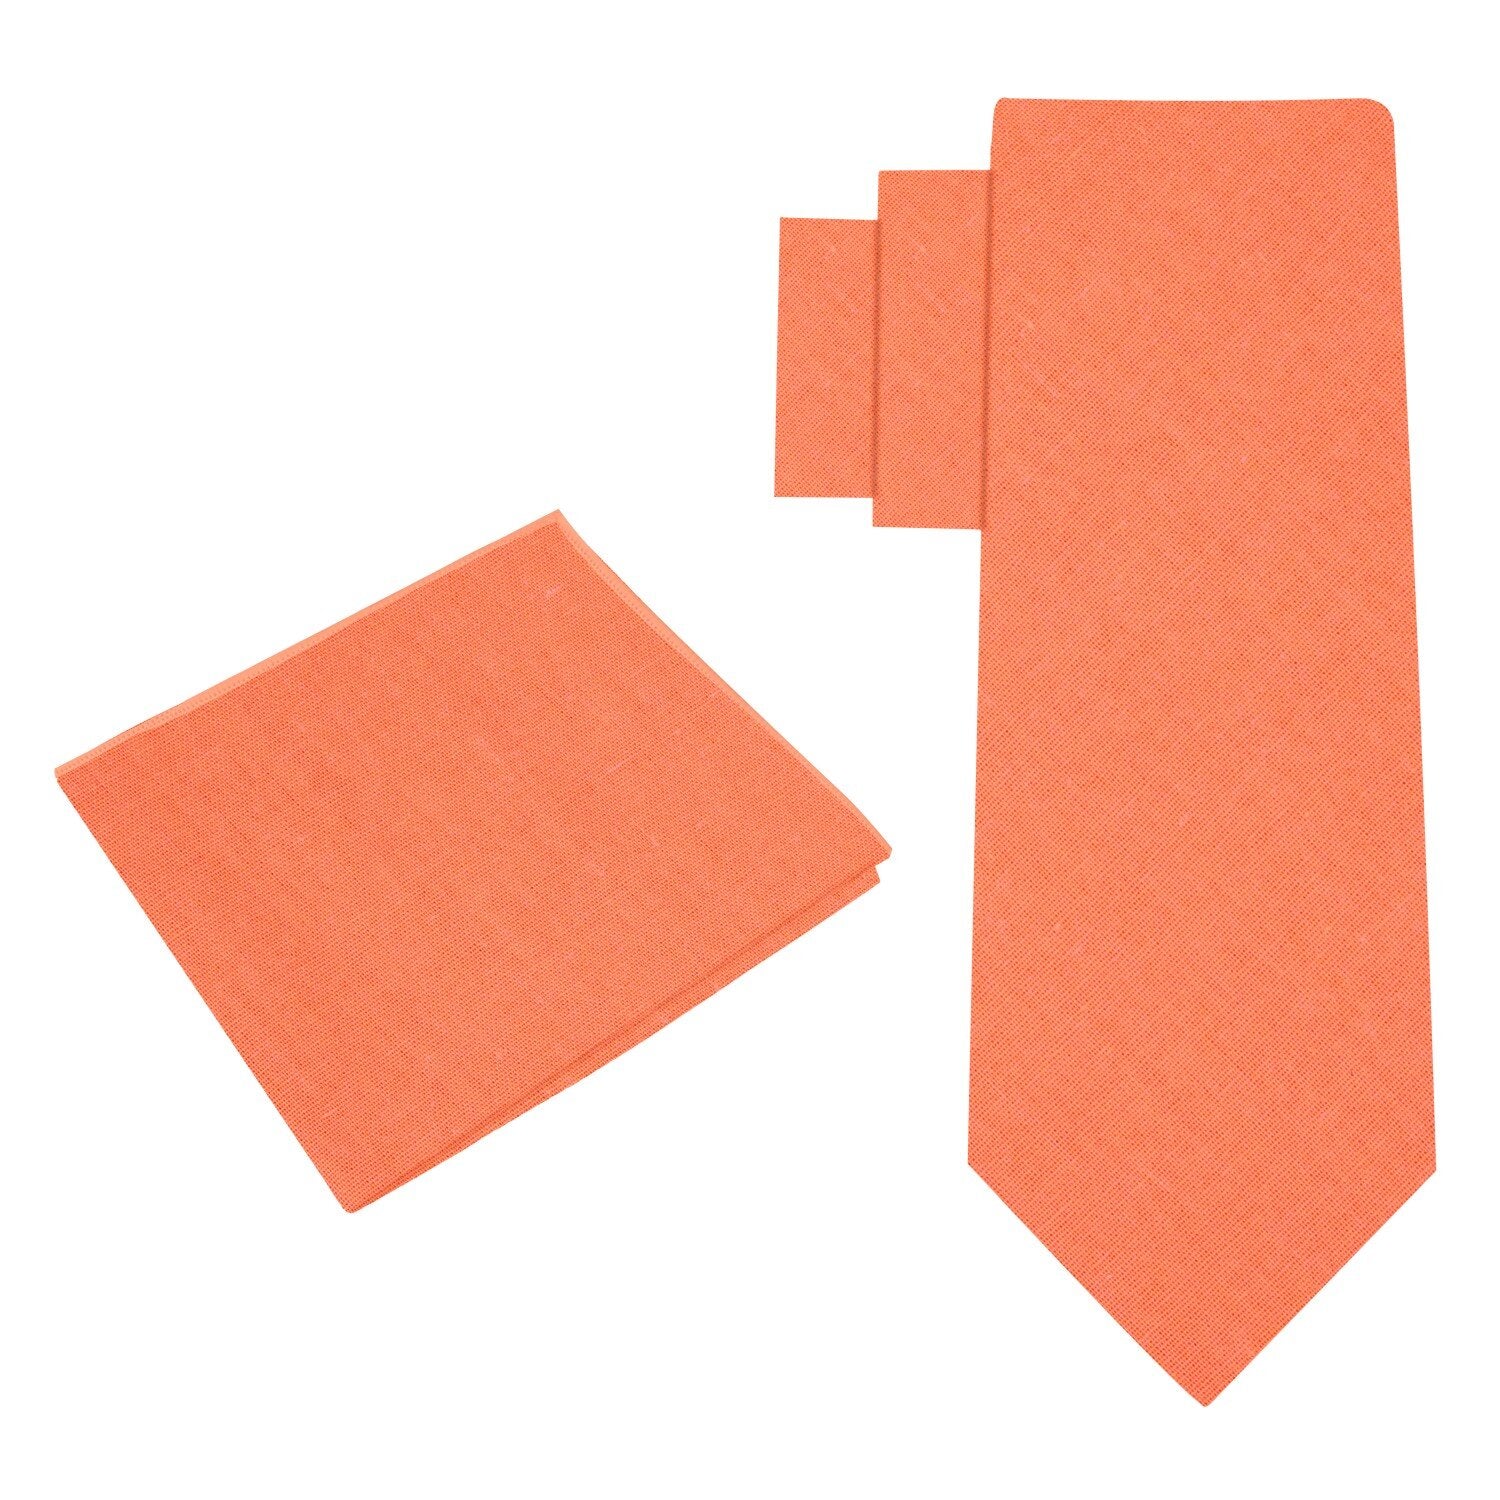 Alt View: Orange Linen Tie and Pocket Square